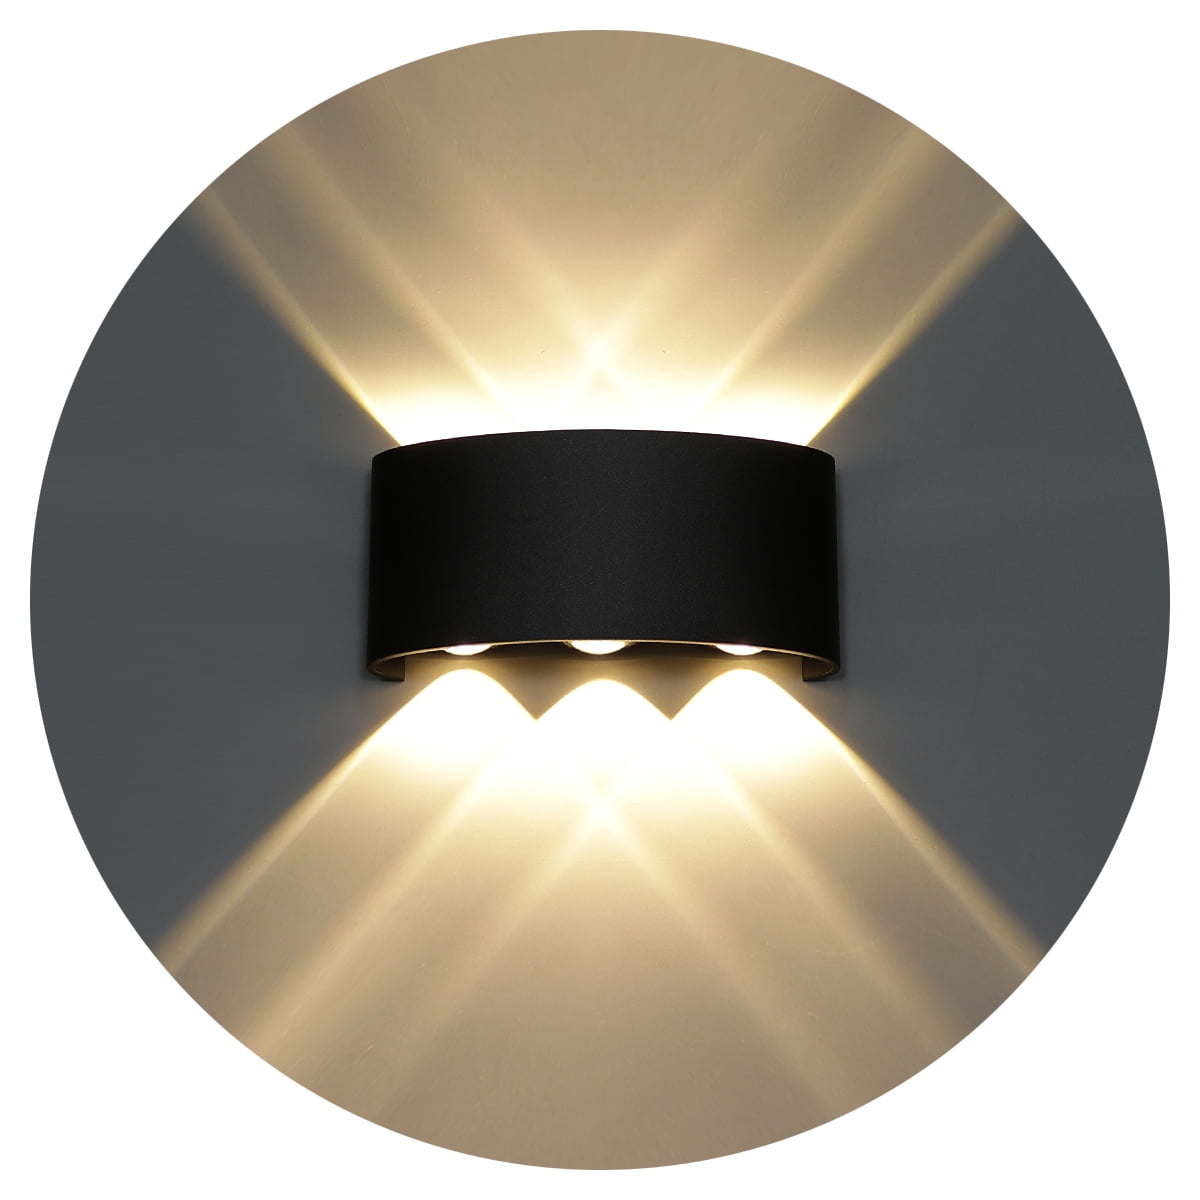 85-265V 16W Energy Saving LED Wall Light Lamp Indoor Decorative Lighting Fixture